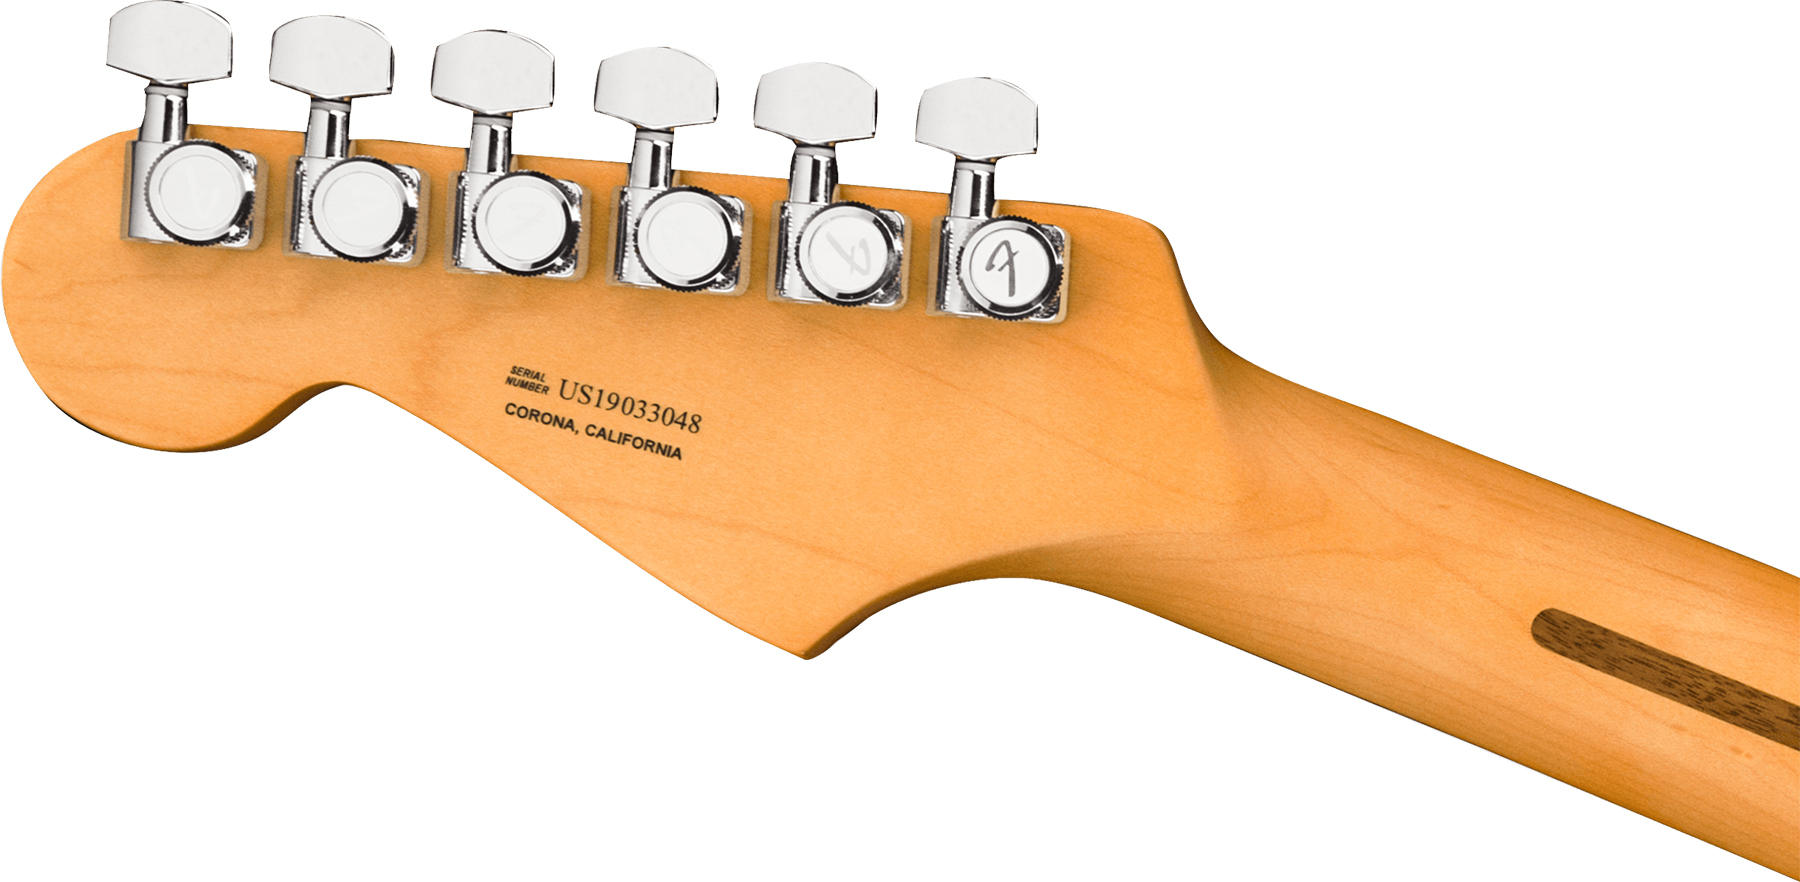 Fender Strat American Ultra Hss 2019 Usa Rw - Ultraburst - Str shape electric guitar - Variation 3